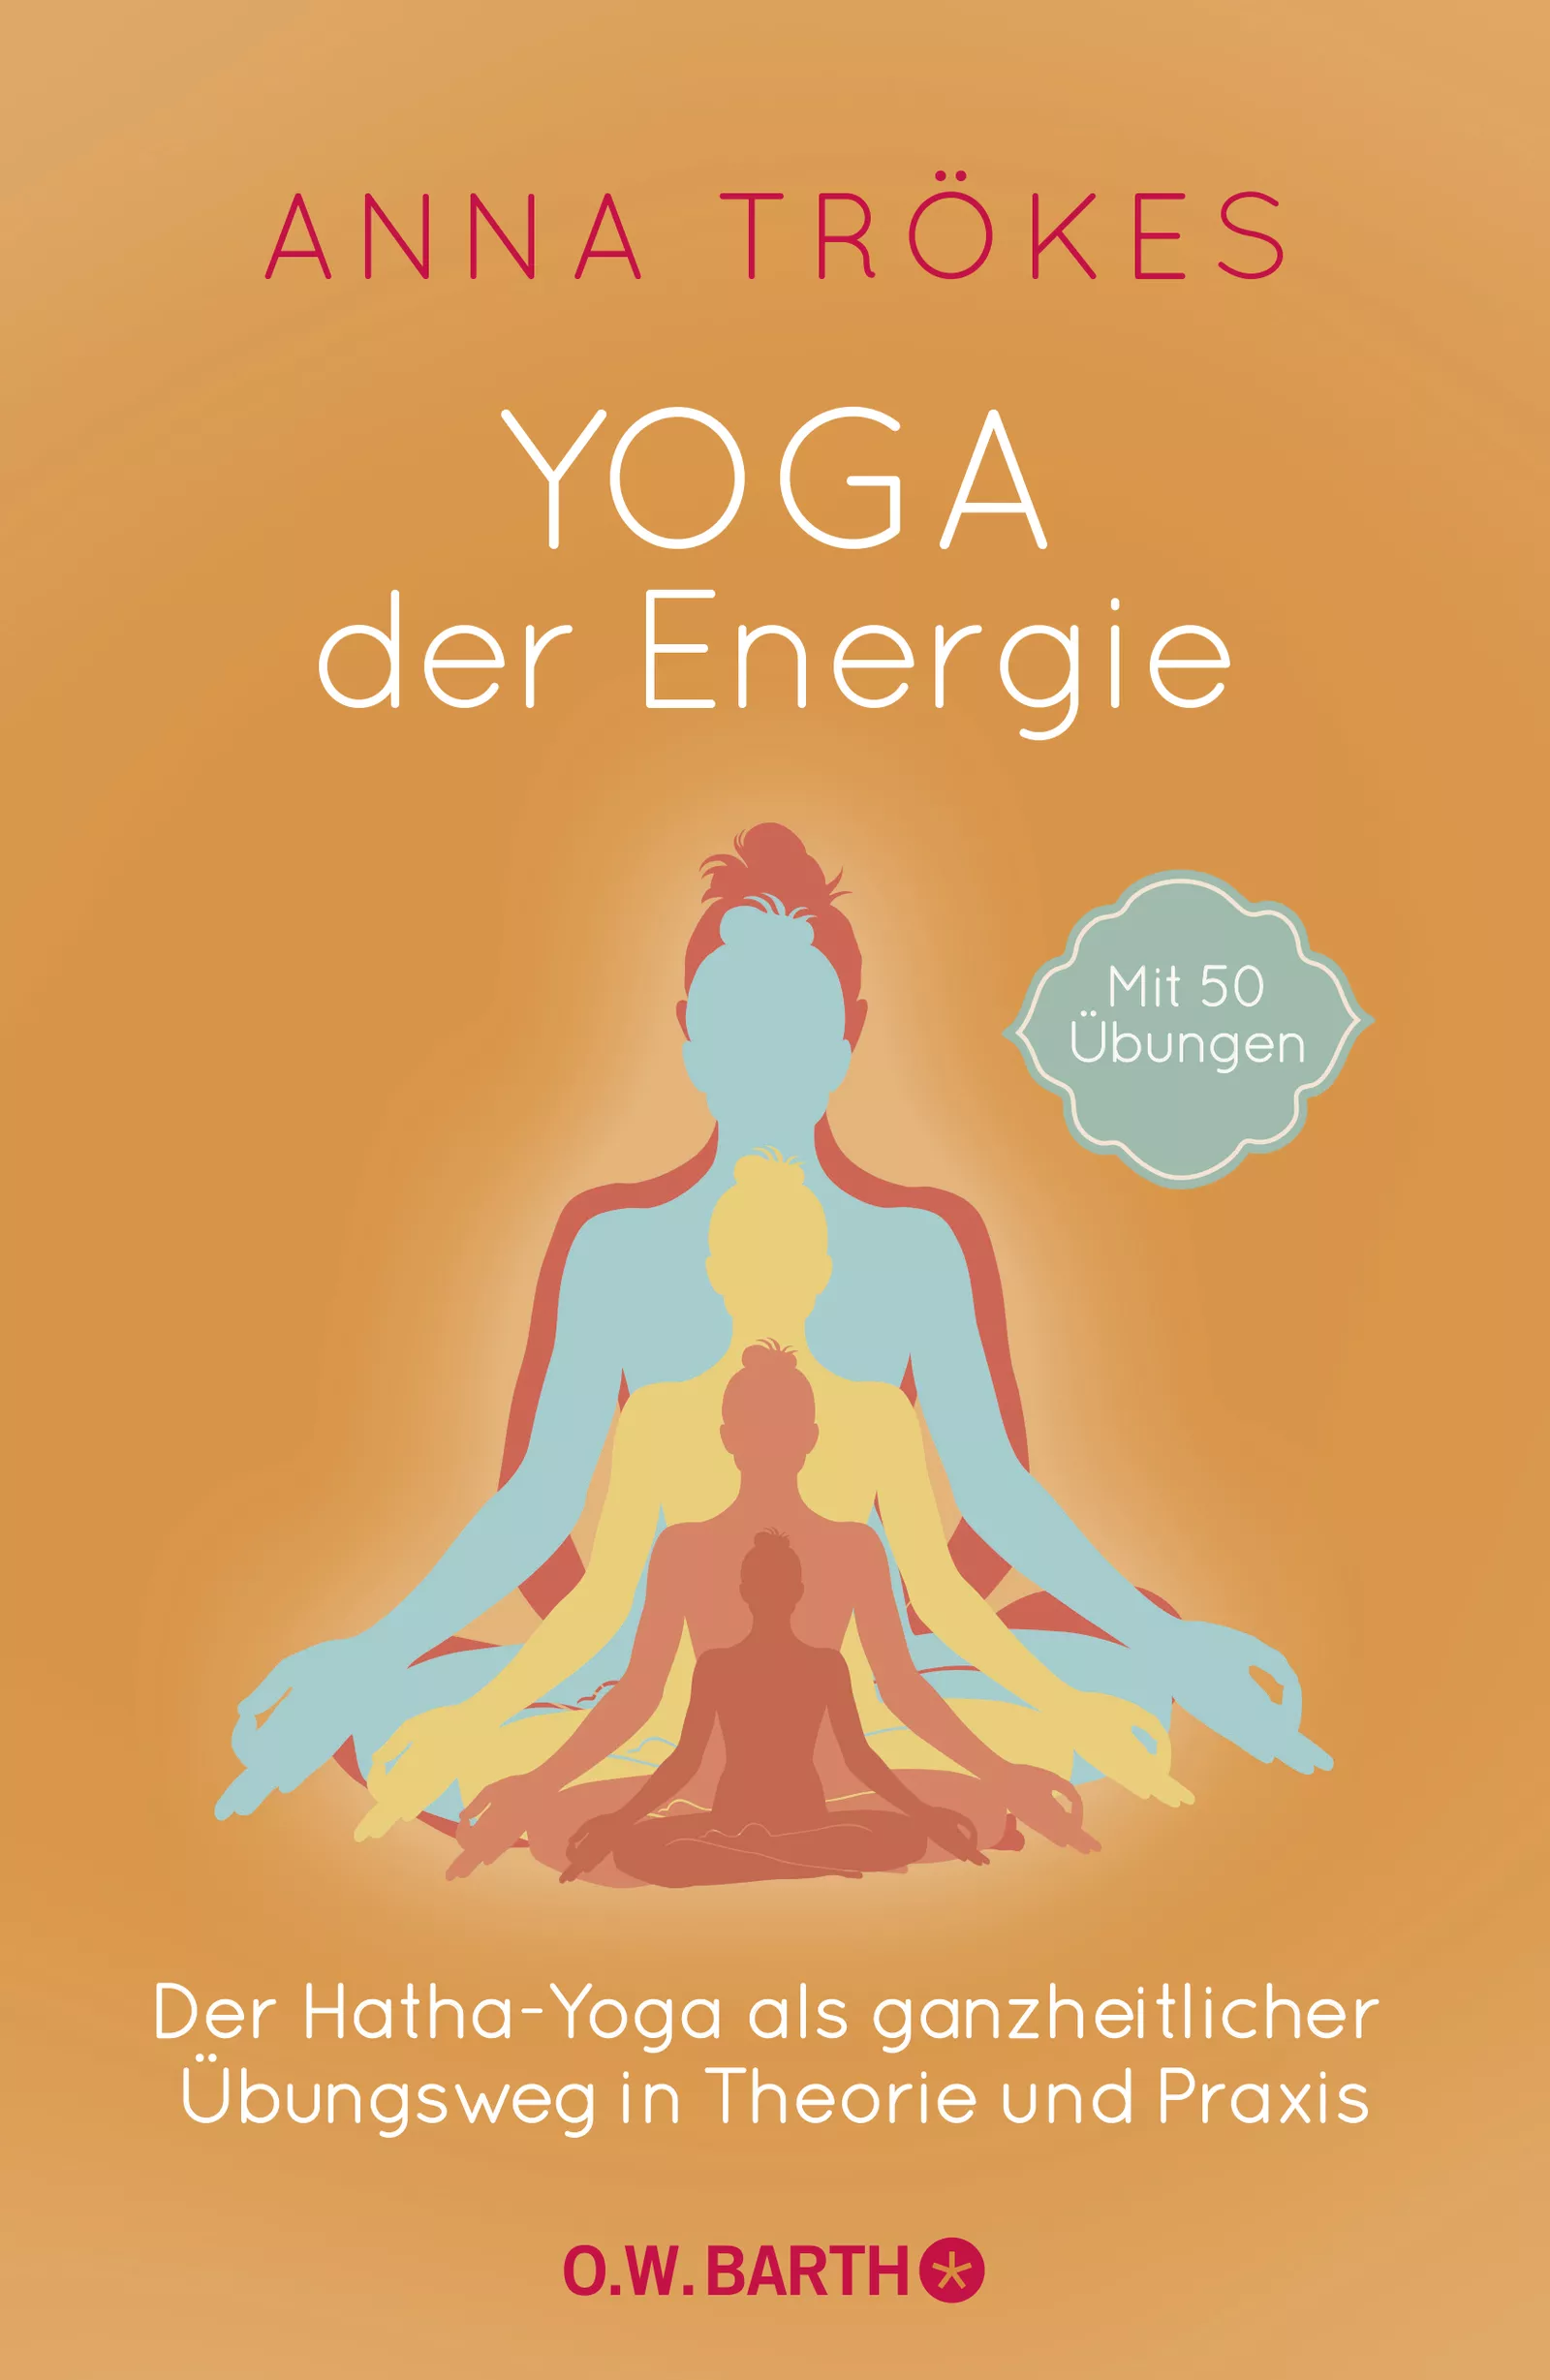 Yoga der Energie